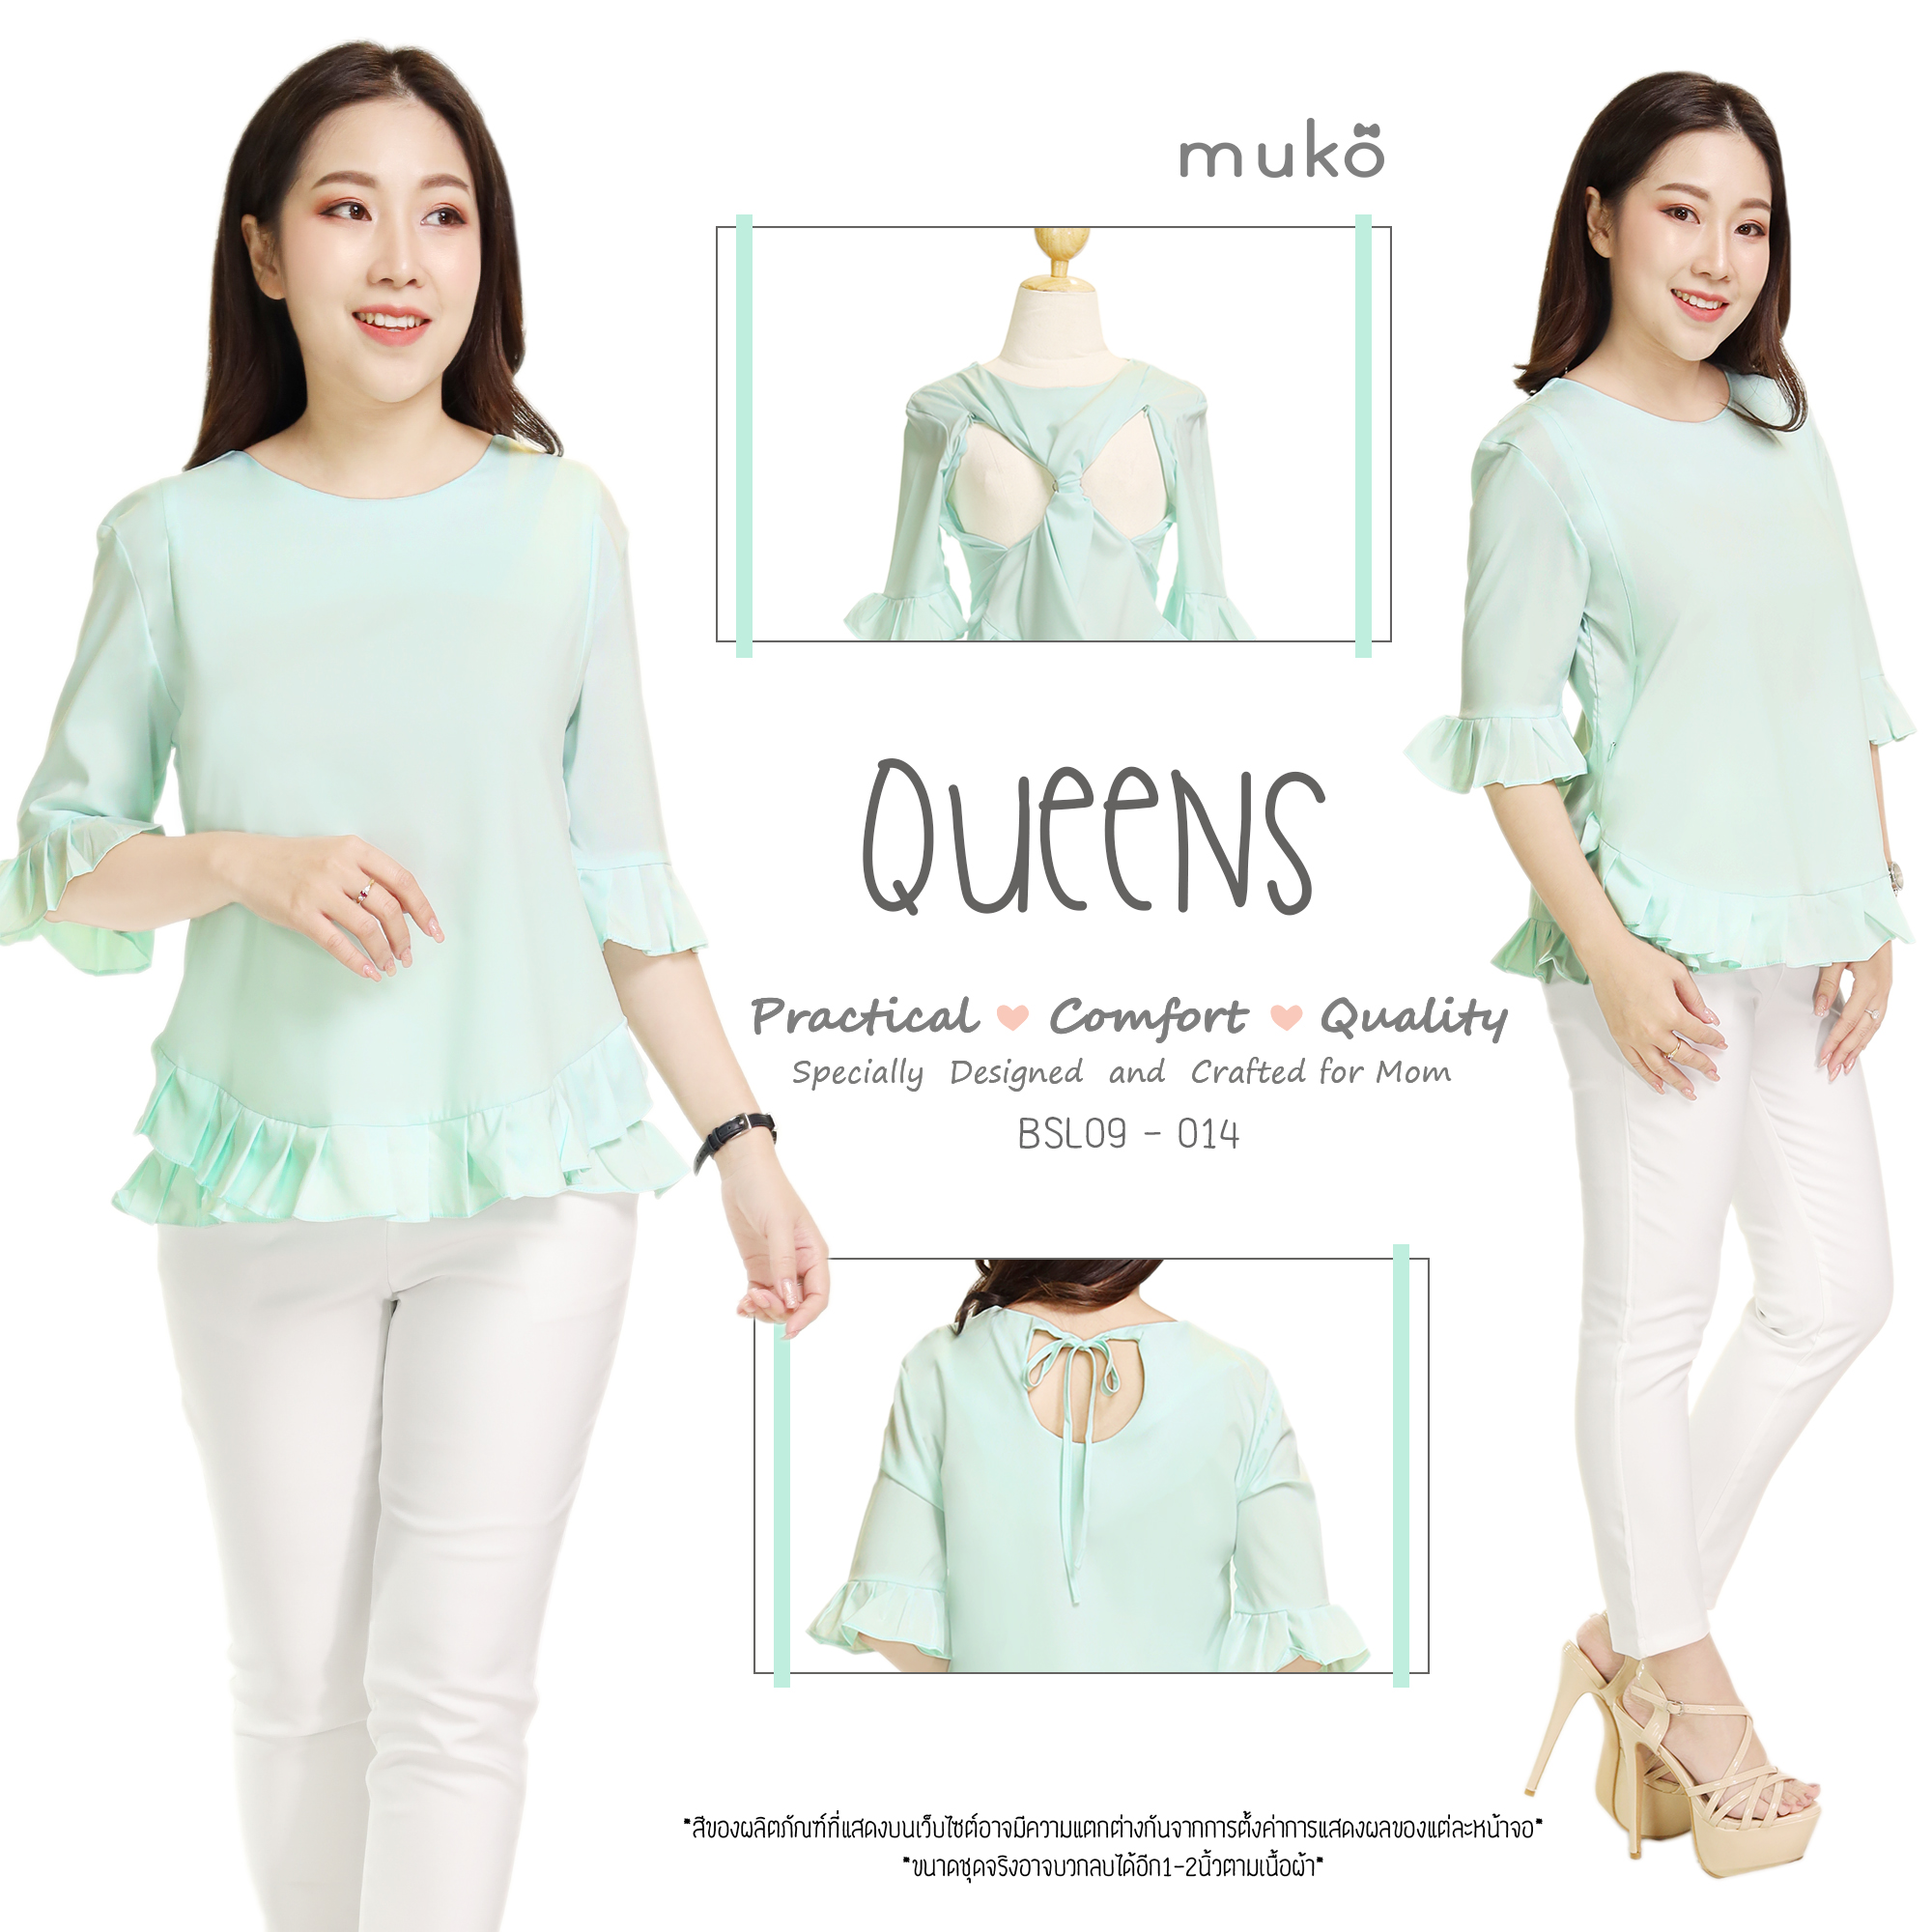 Muko Queens เสื้อให้นม คลุมท้อง BSL09-014 เขียวอ่อน